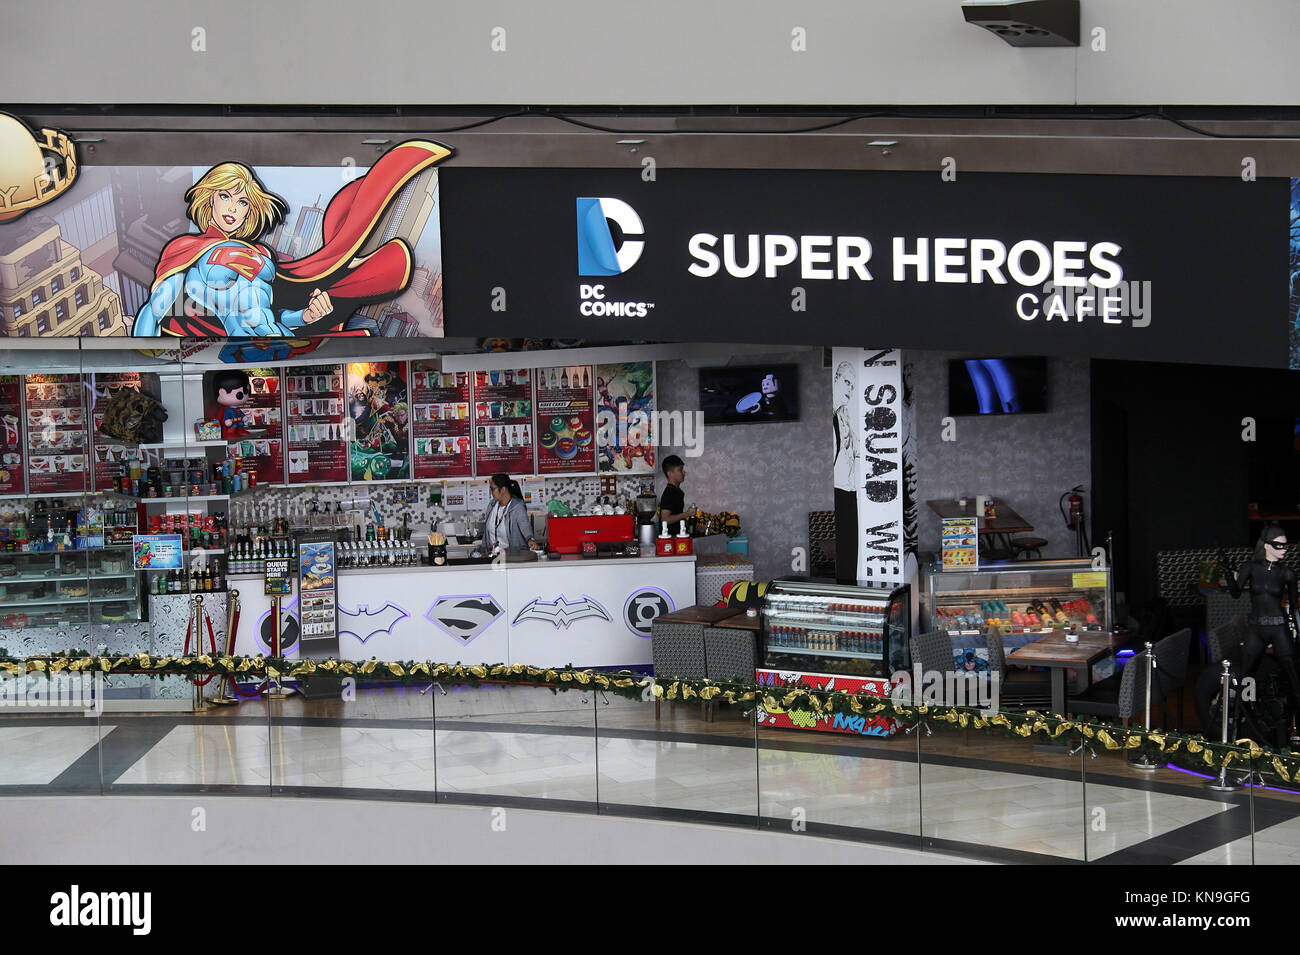 La DC Comics super eroi Cafe al Shoppes Marina Bay Sands shopping mall Foto Stock